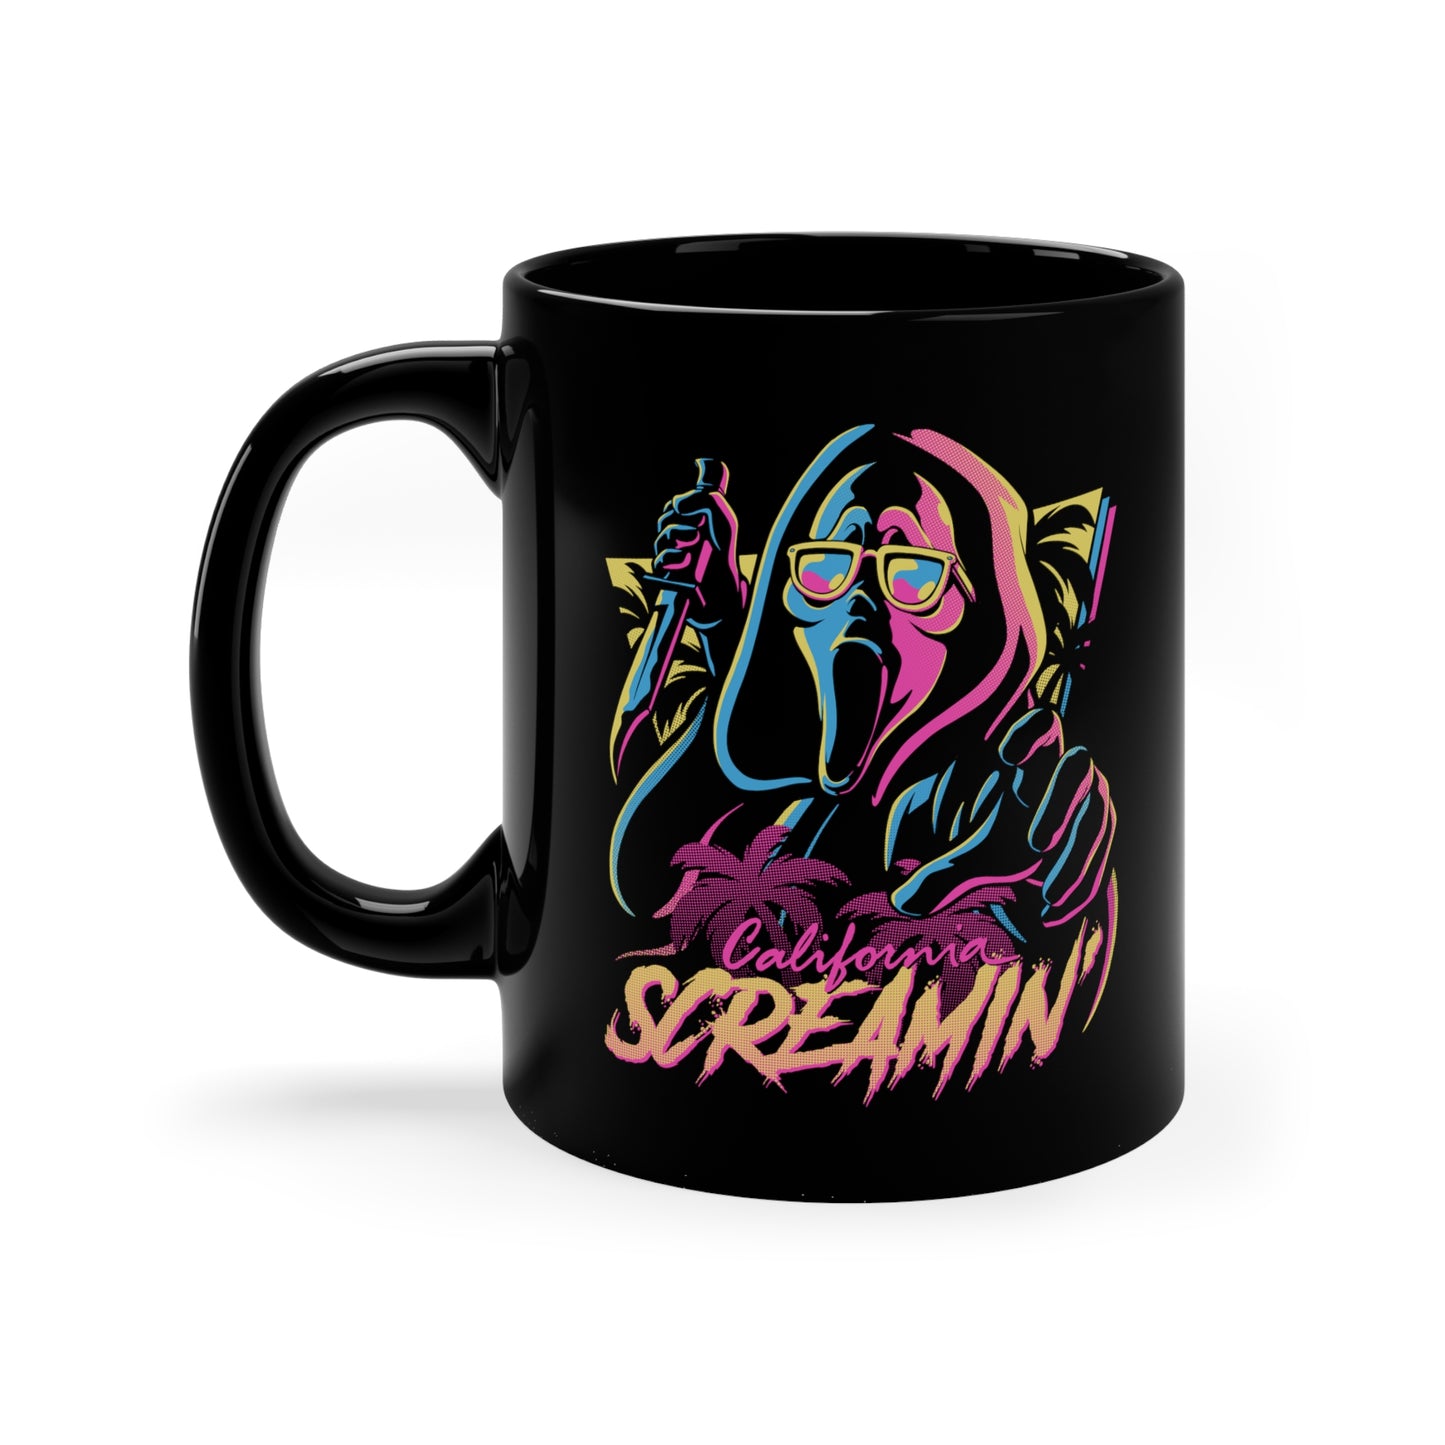 California Screamin' mug